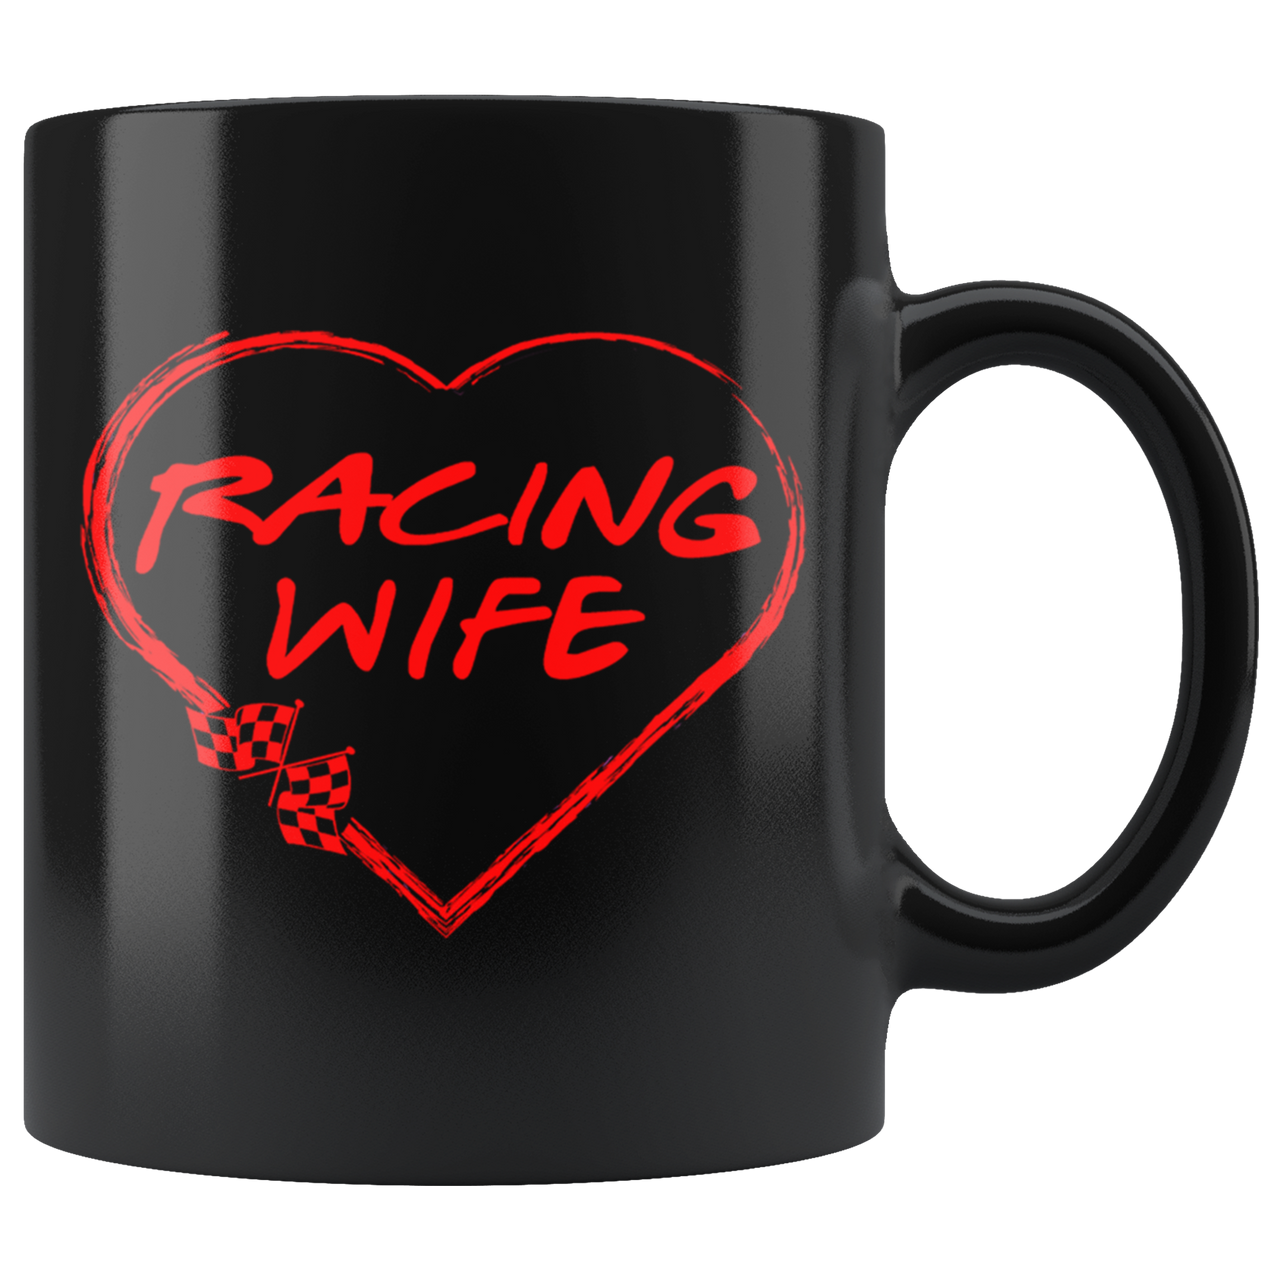 Racing Wife Heart Mug!